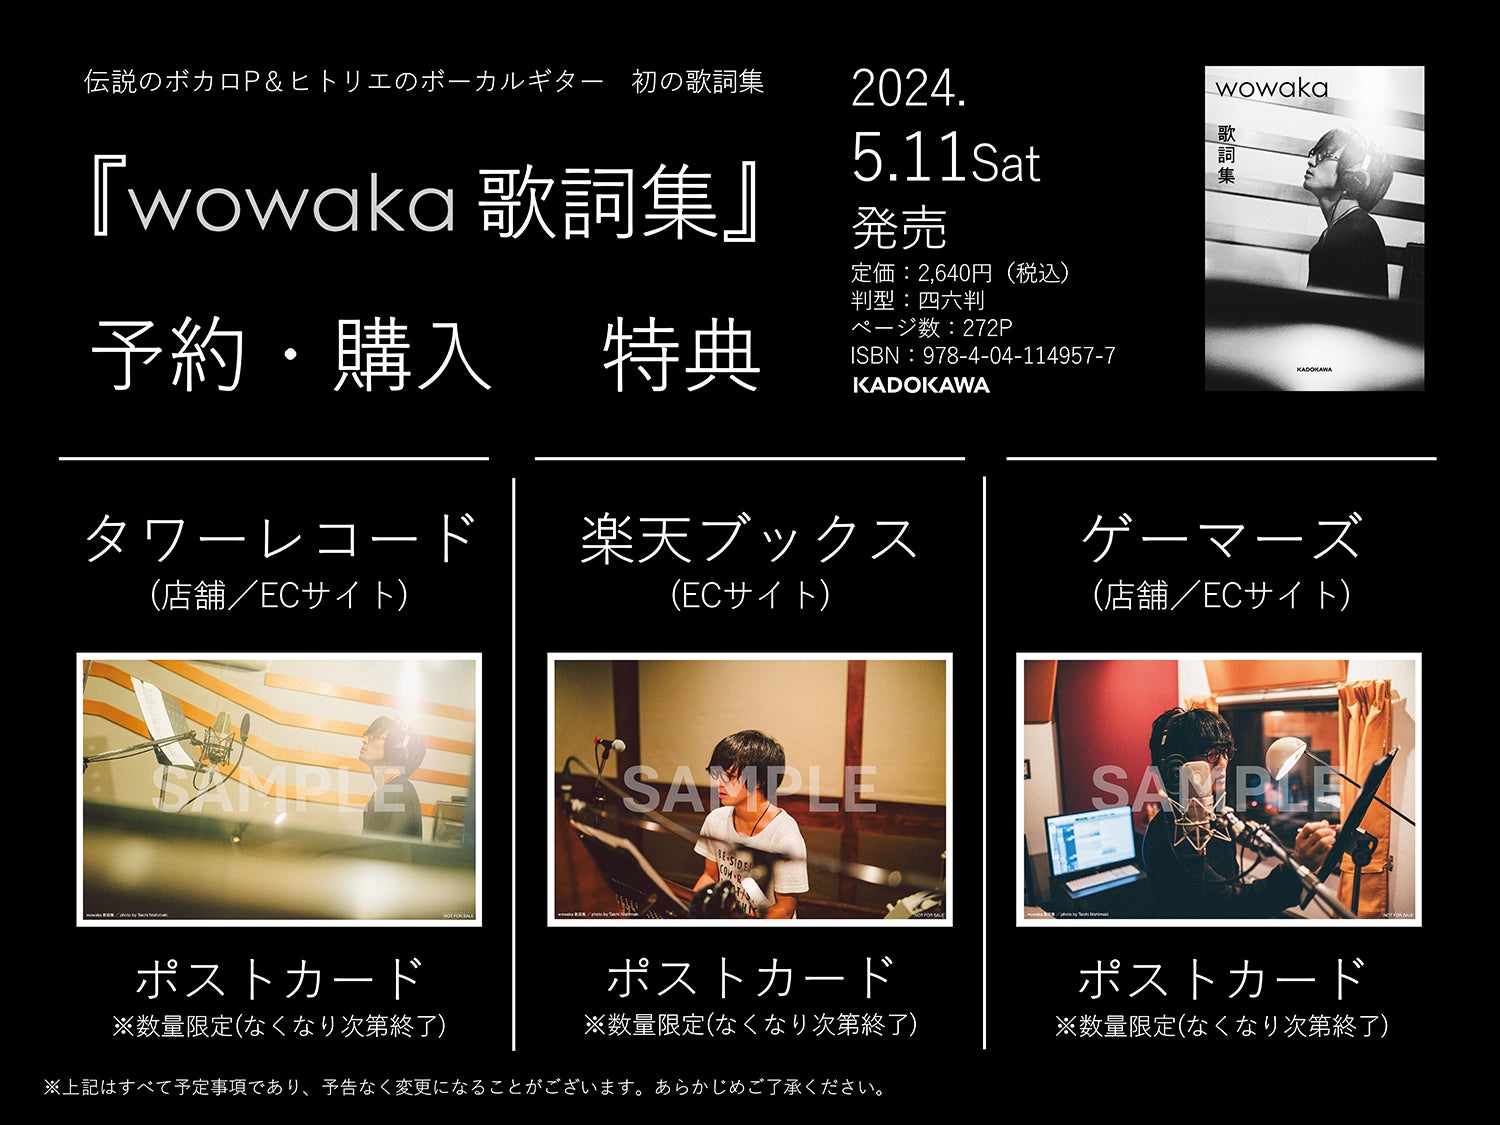 『wowaka 歌詞集』特典ビジュアル公開。レコーディング時の貴重な写真が購入特典ポストカードに！